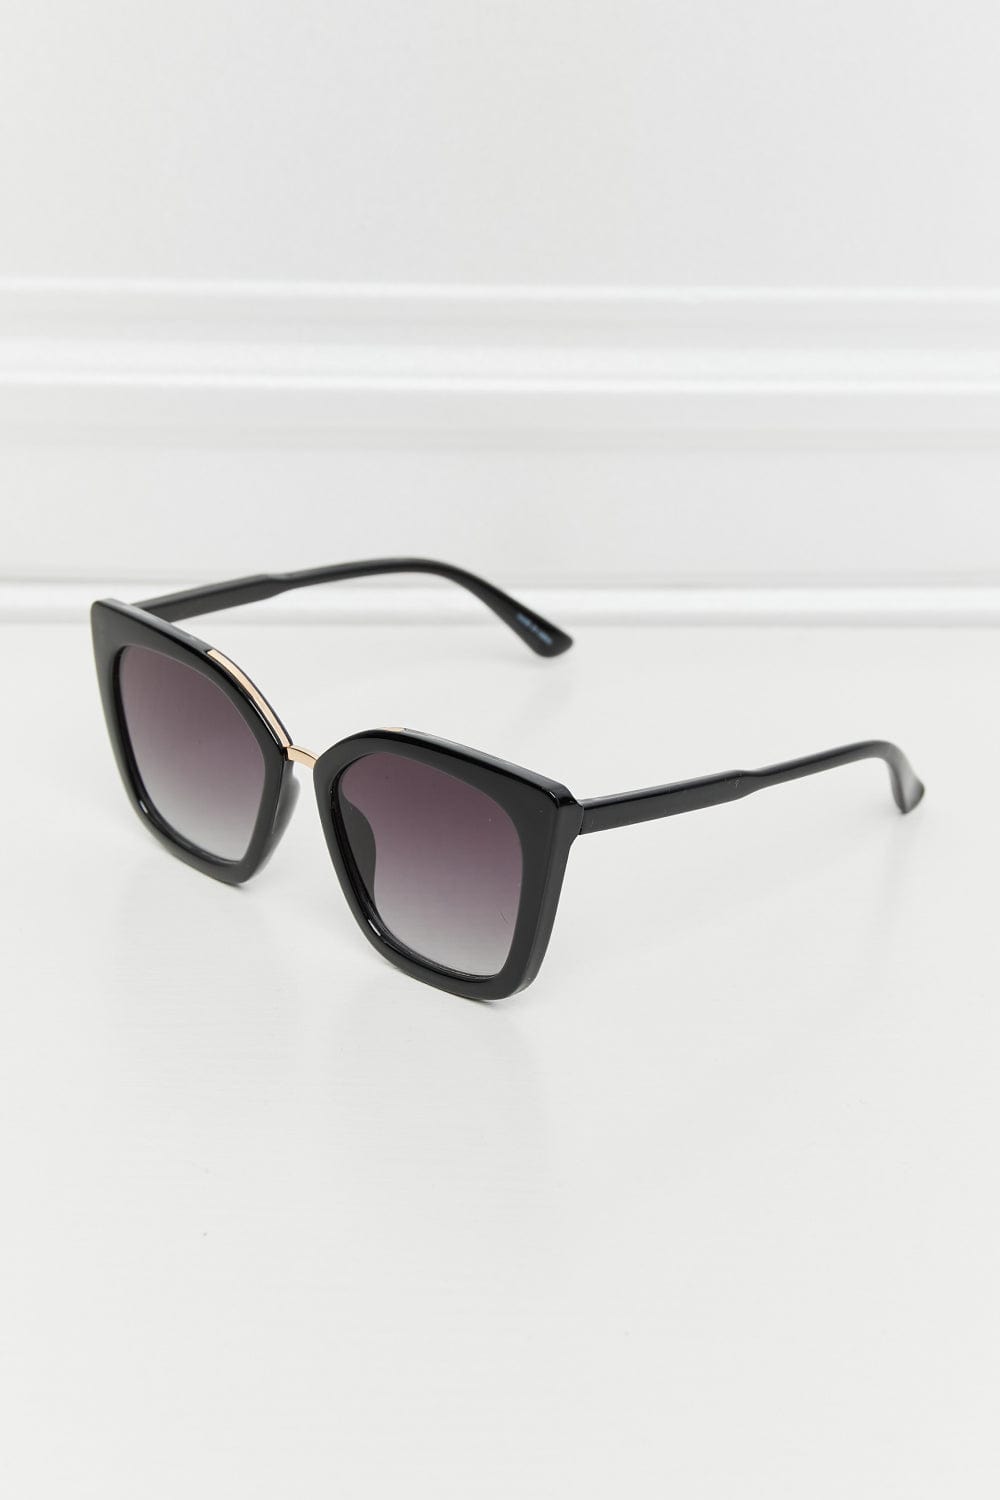 Trendsi sunglasses Black / One Size Cat Eye Full Rim Polycarbonate Sunglasses